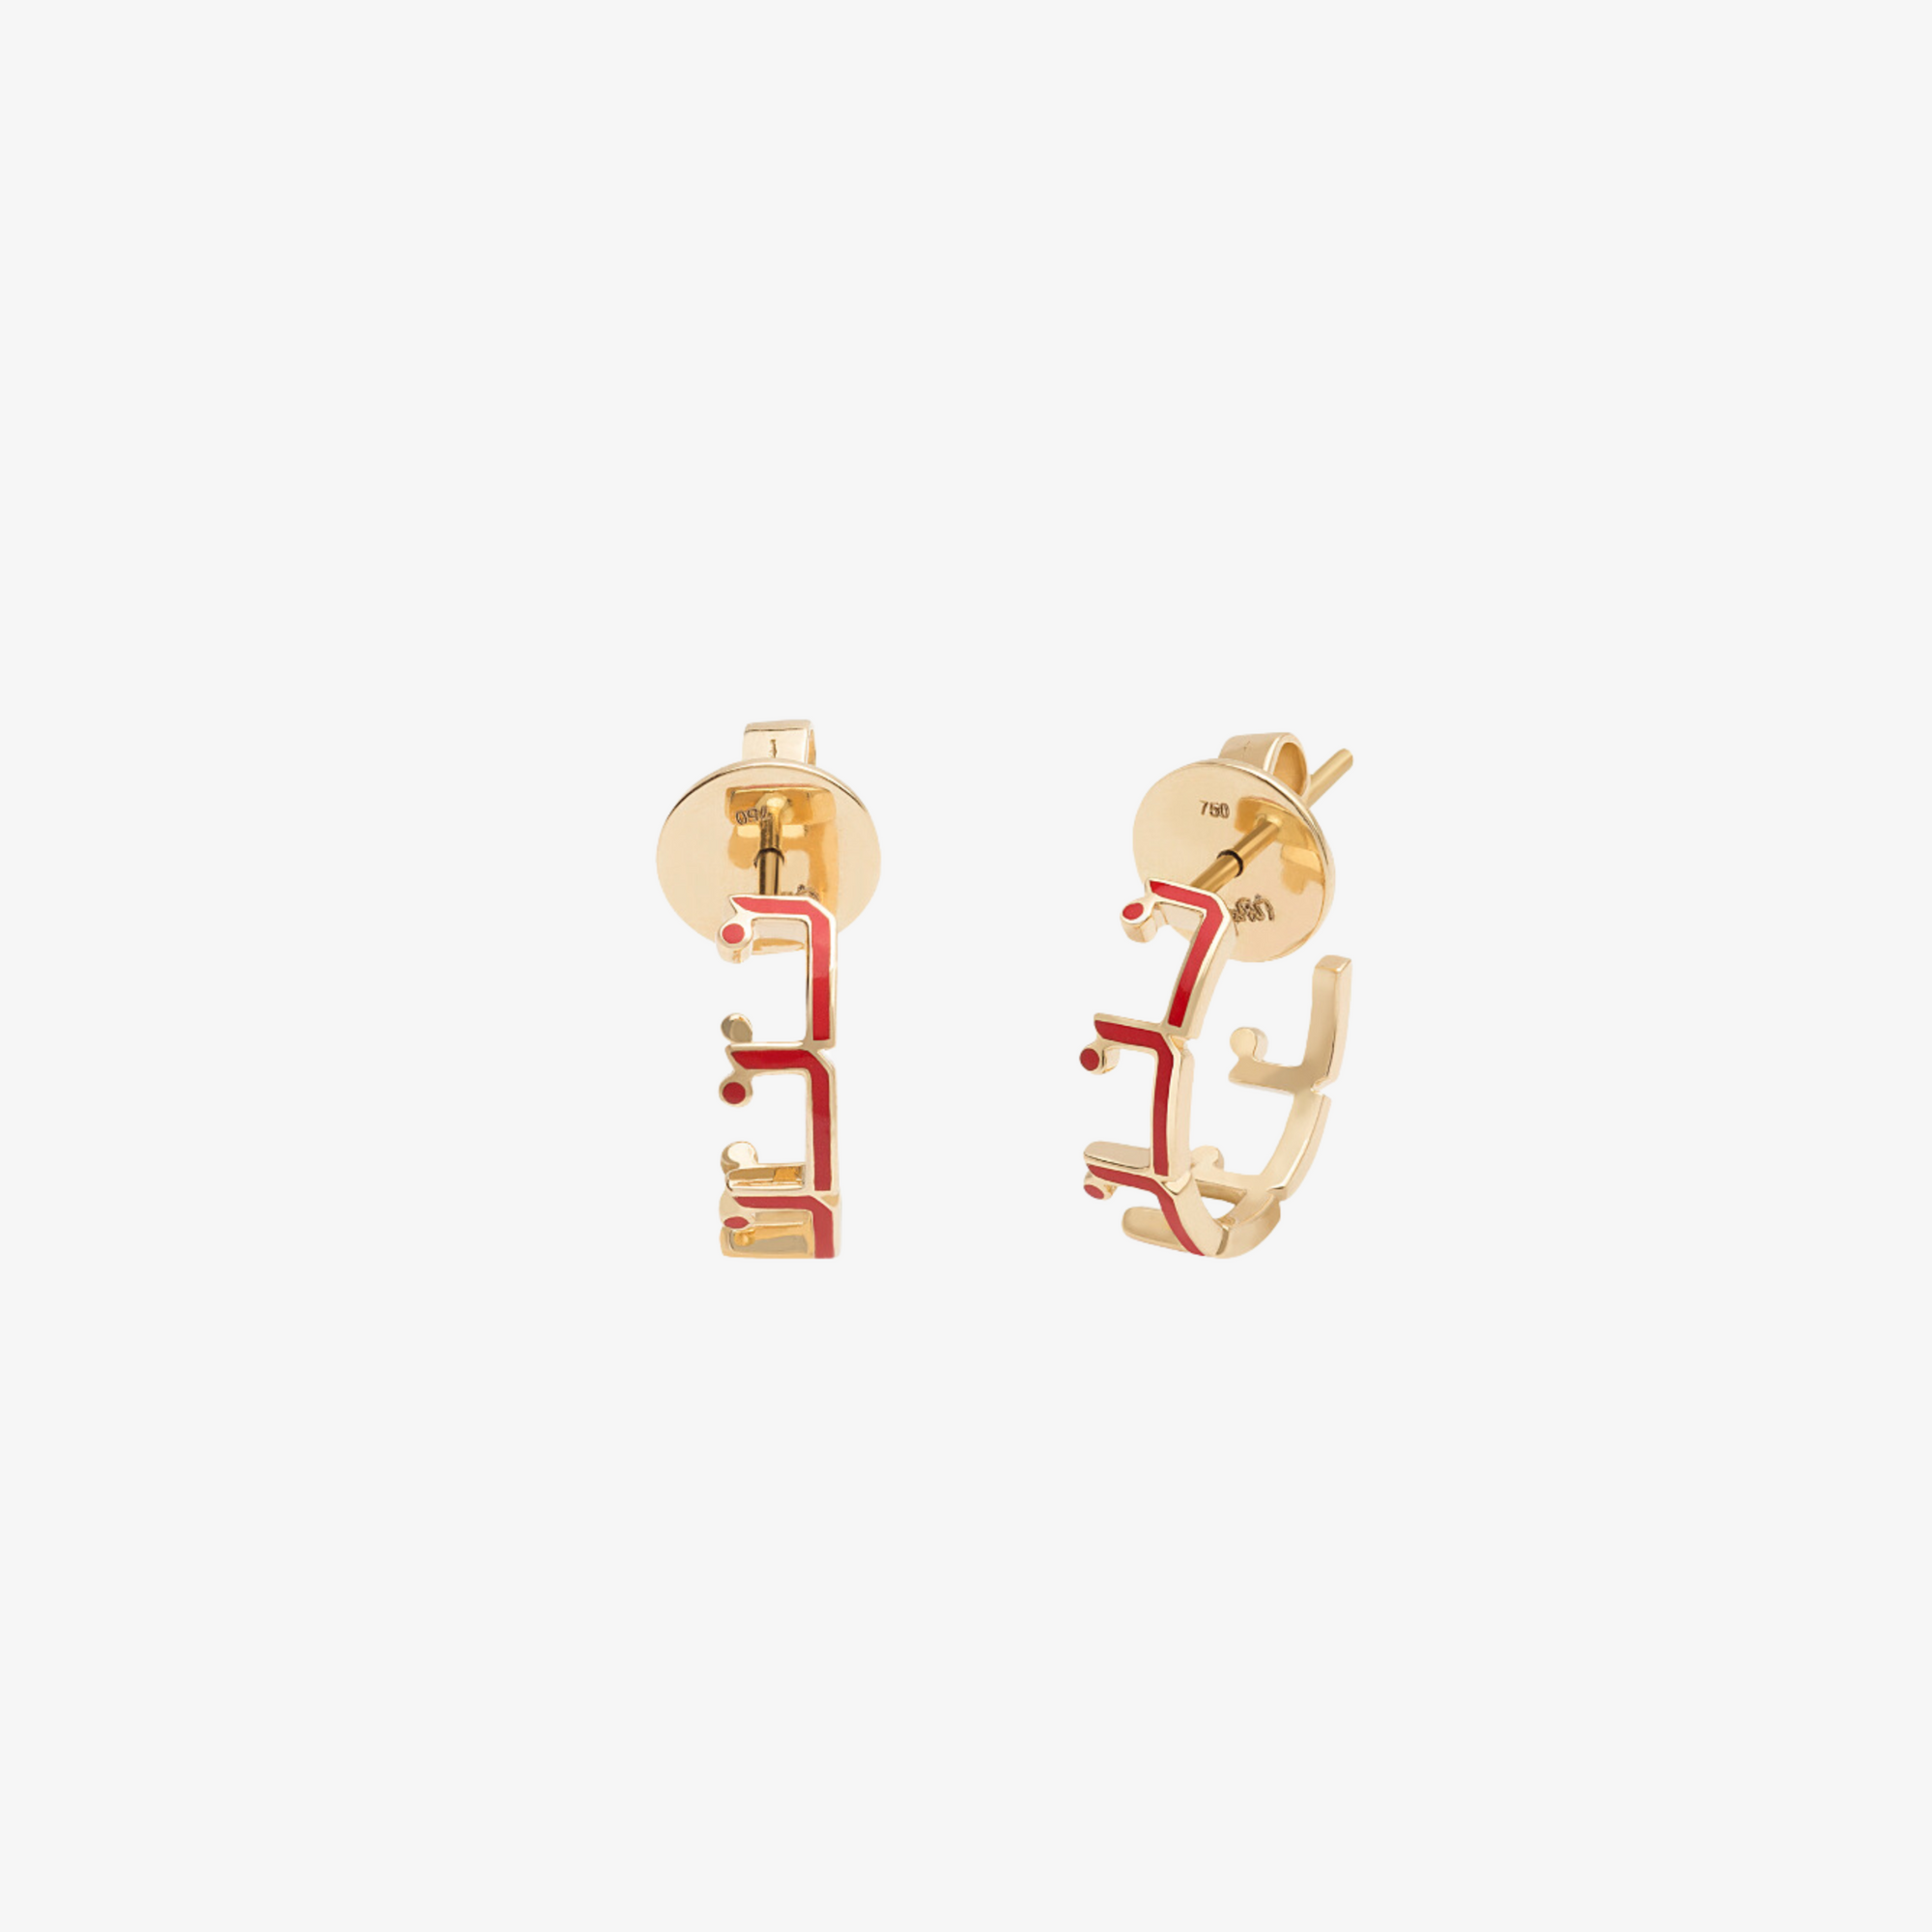 NASJ — 18K Gold & Enamel Letter Earrings